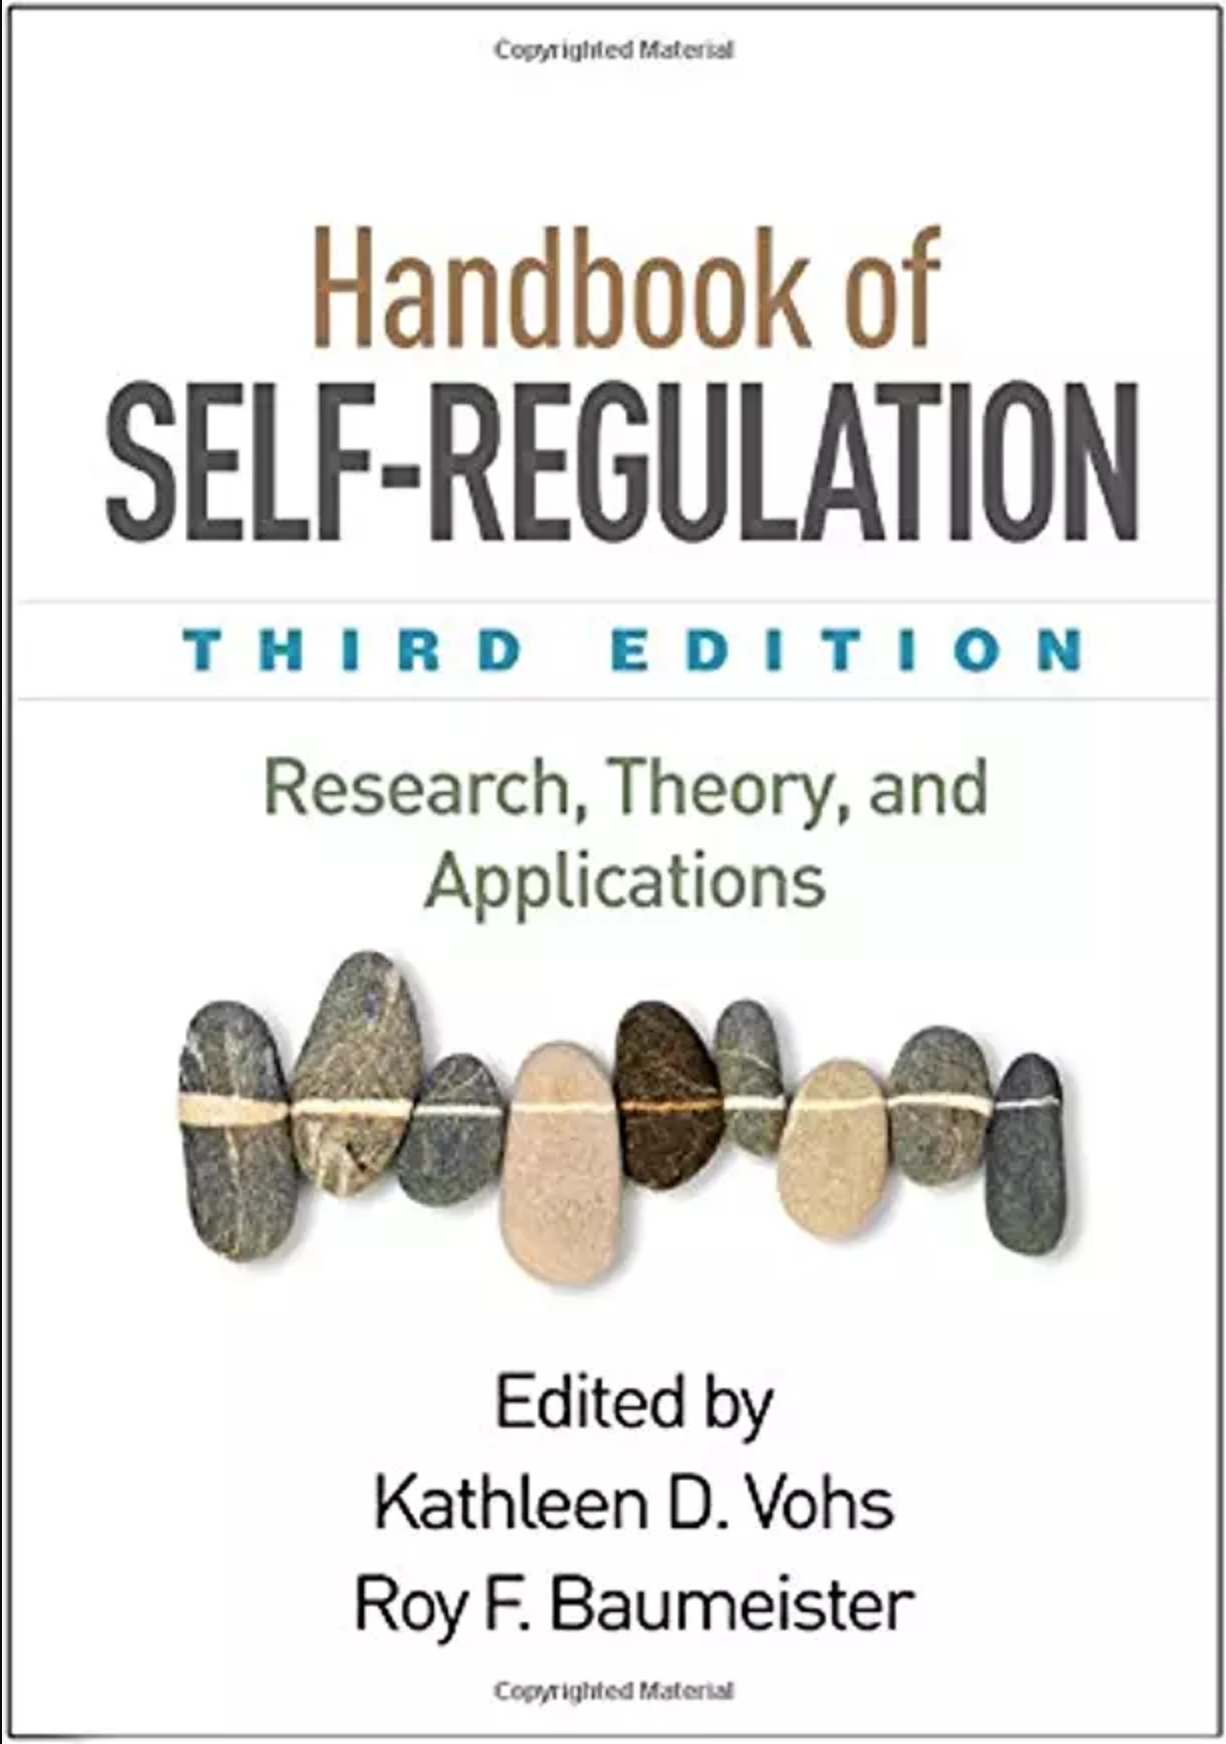 Book cover of "Handbook of Self-Regulation, Third Edition"